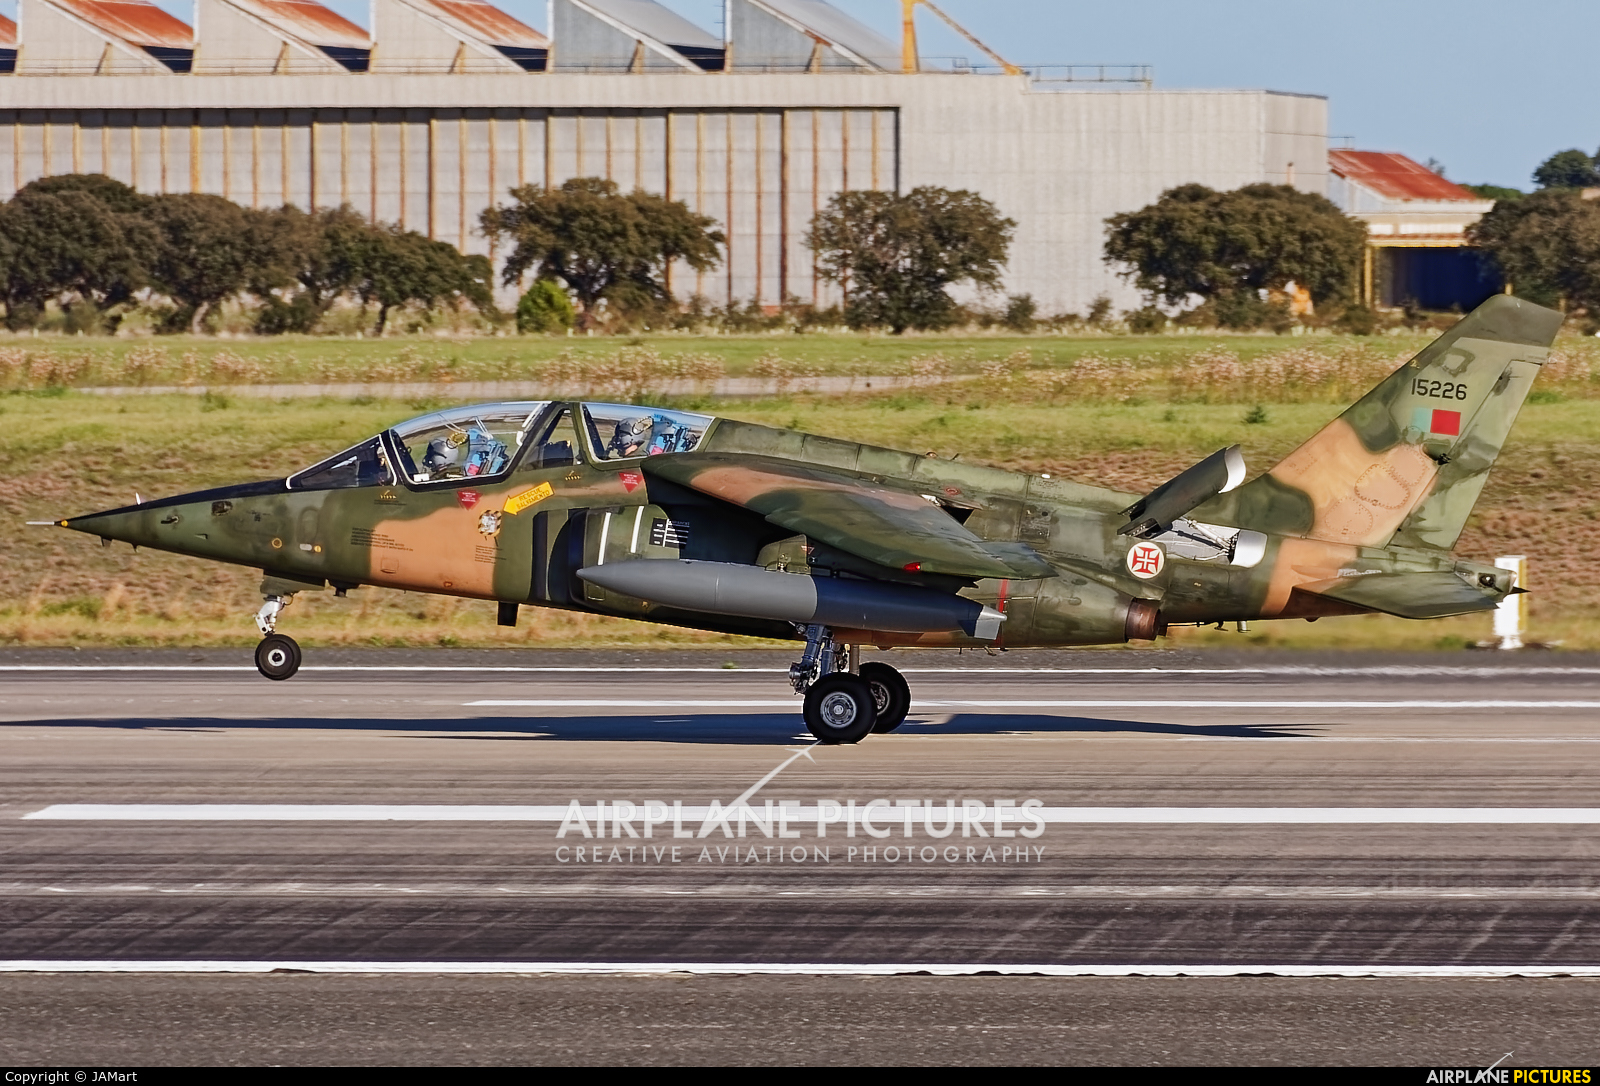 Portugal - Air Force 15226 aircraft at Beja AB